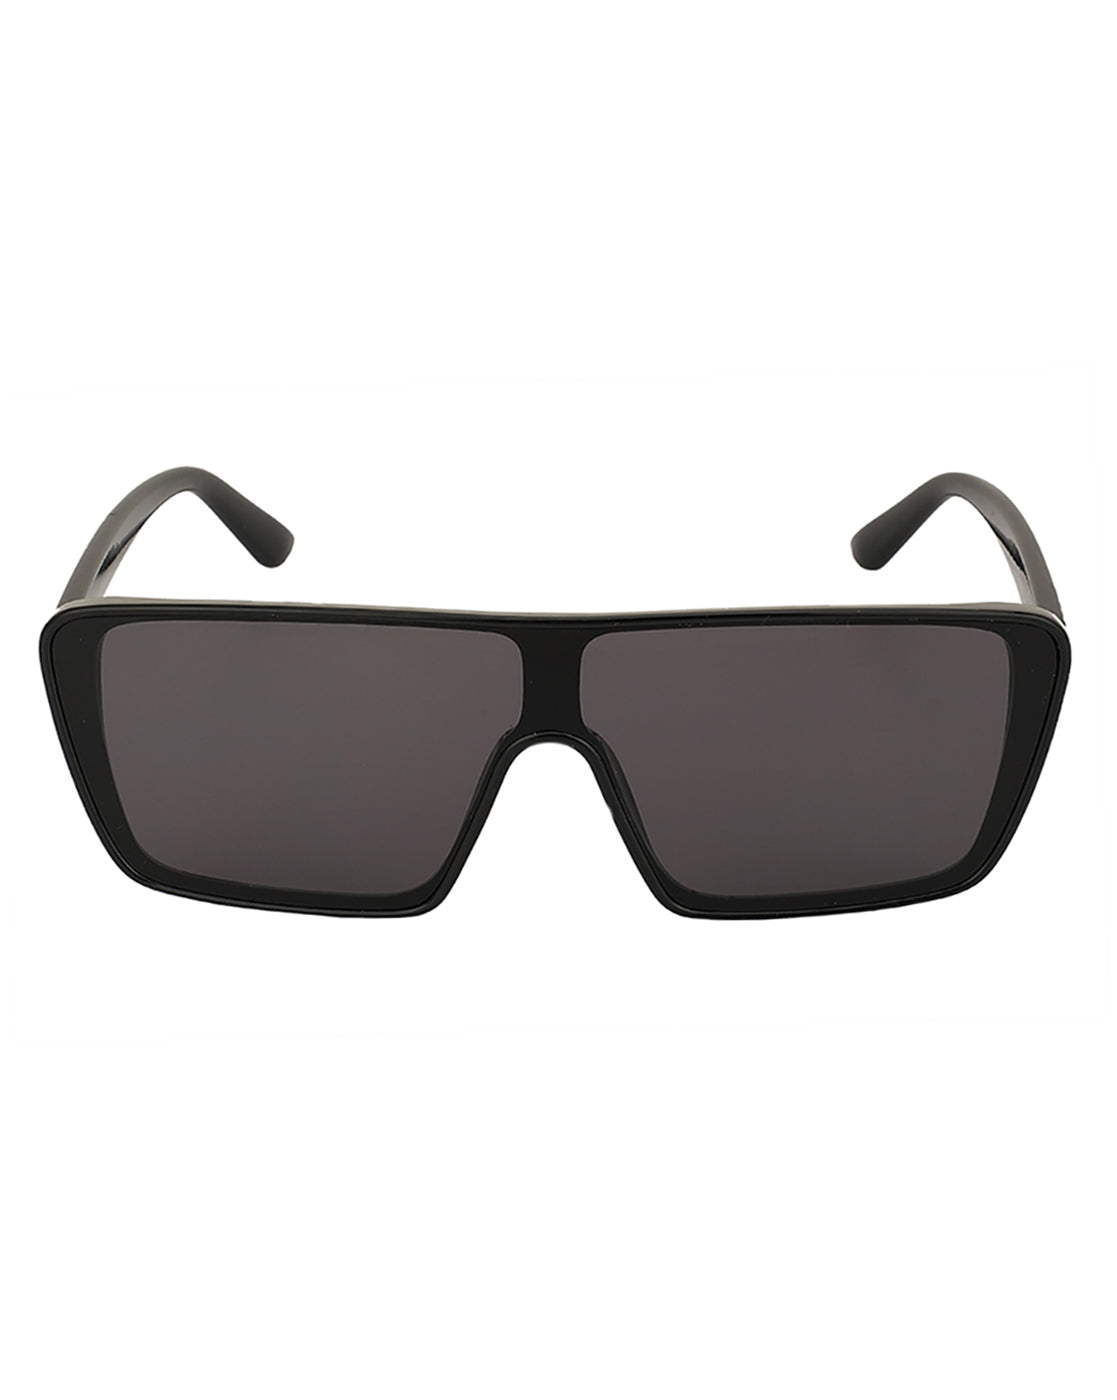 Premium Black Toned Uv Protected Lens Shield Sunglass For Men